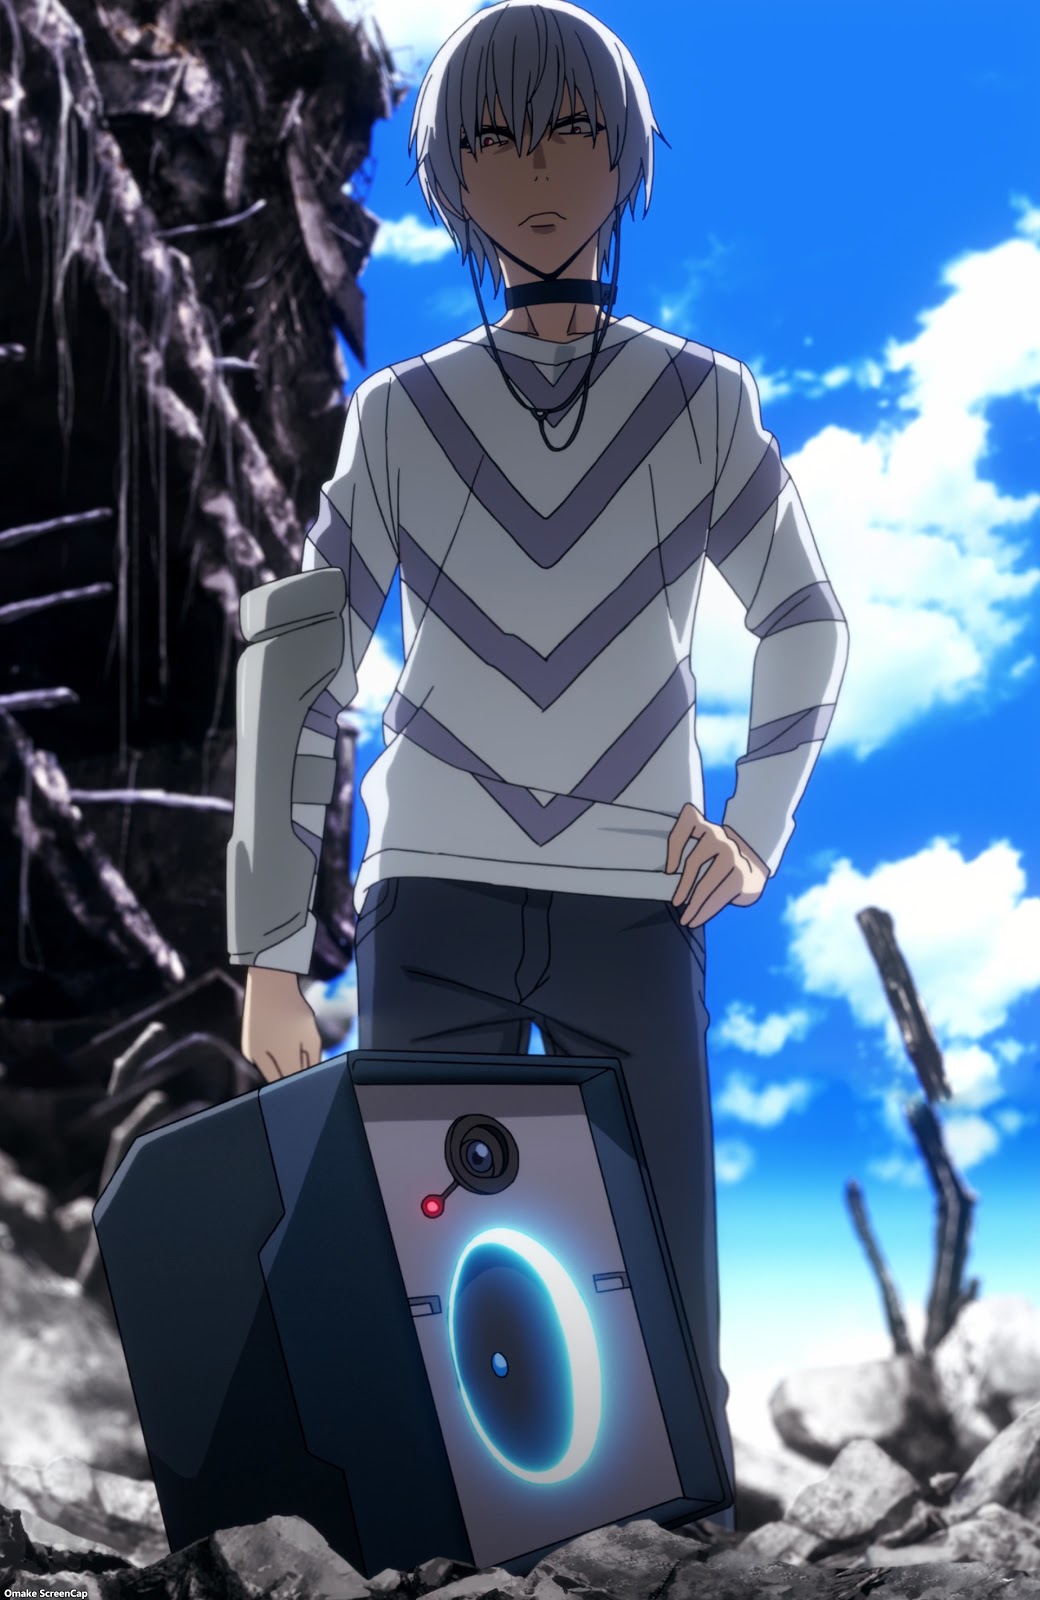 Joeschmo's Gears and Grounds: 10 Second Anime - Toaru Kagaku no Accelerator  - Episode 1